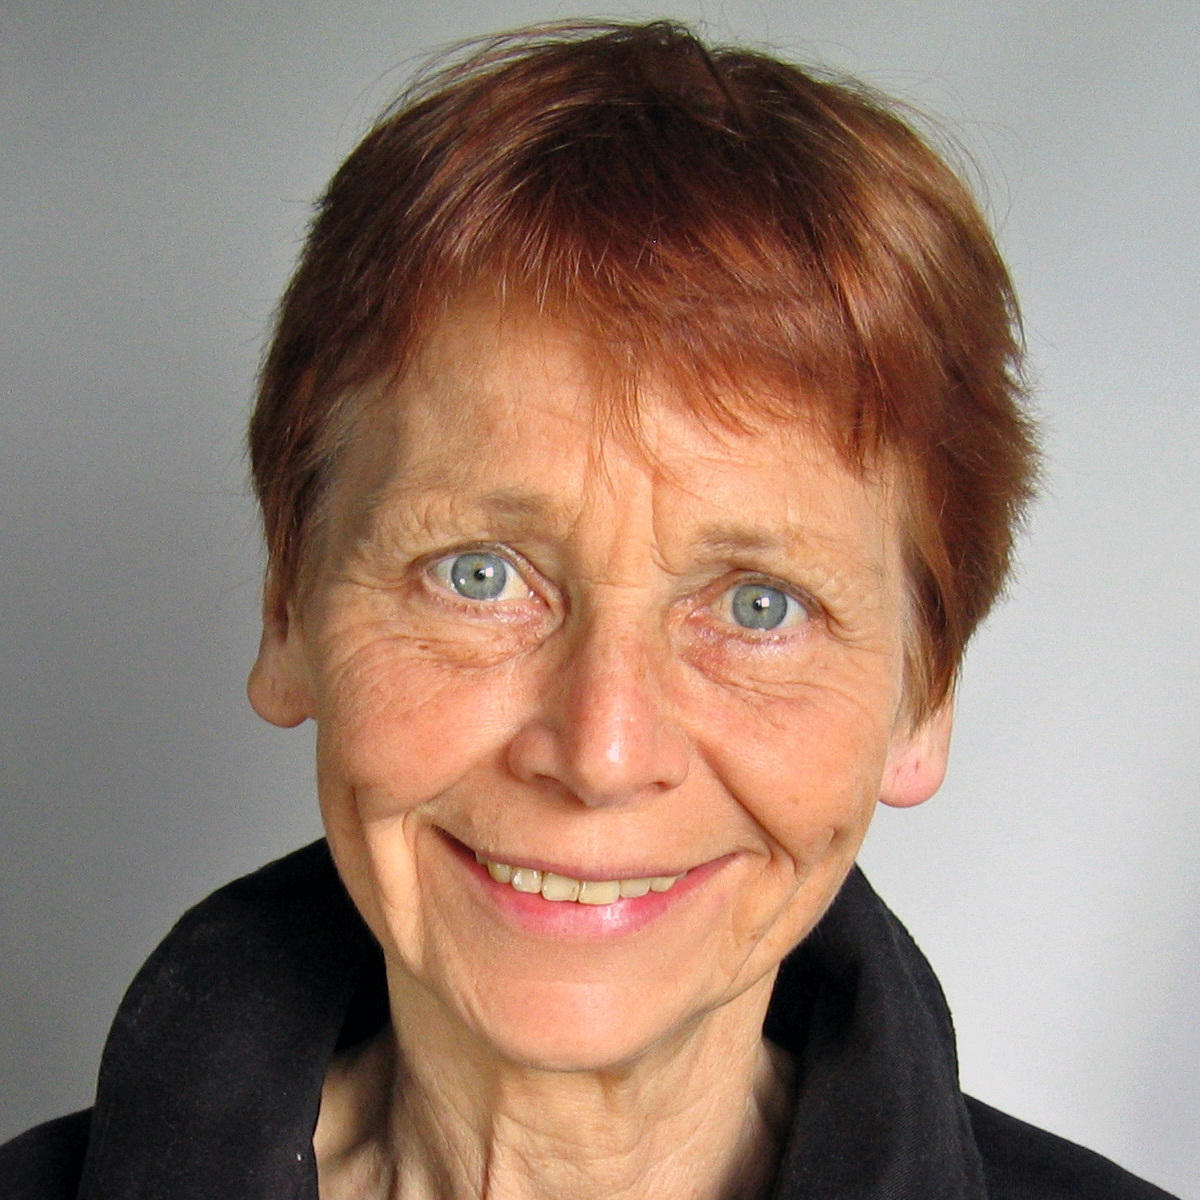 Margit Geilenbrügge